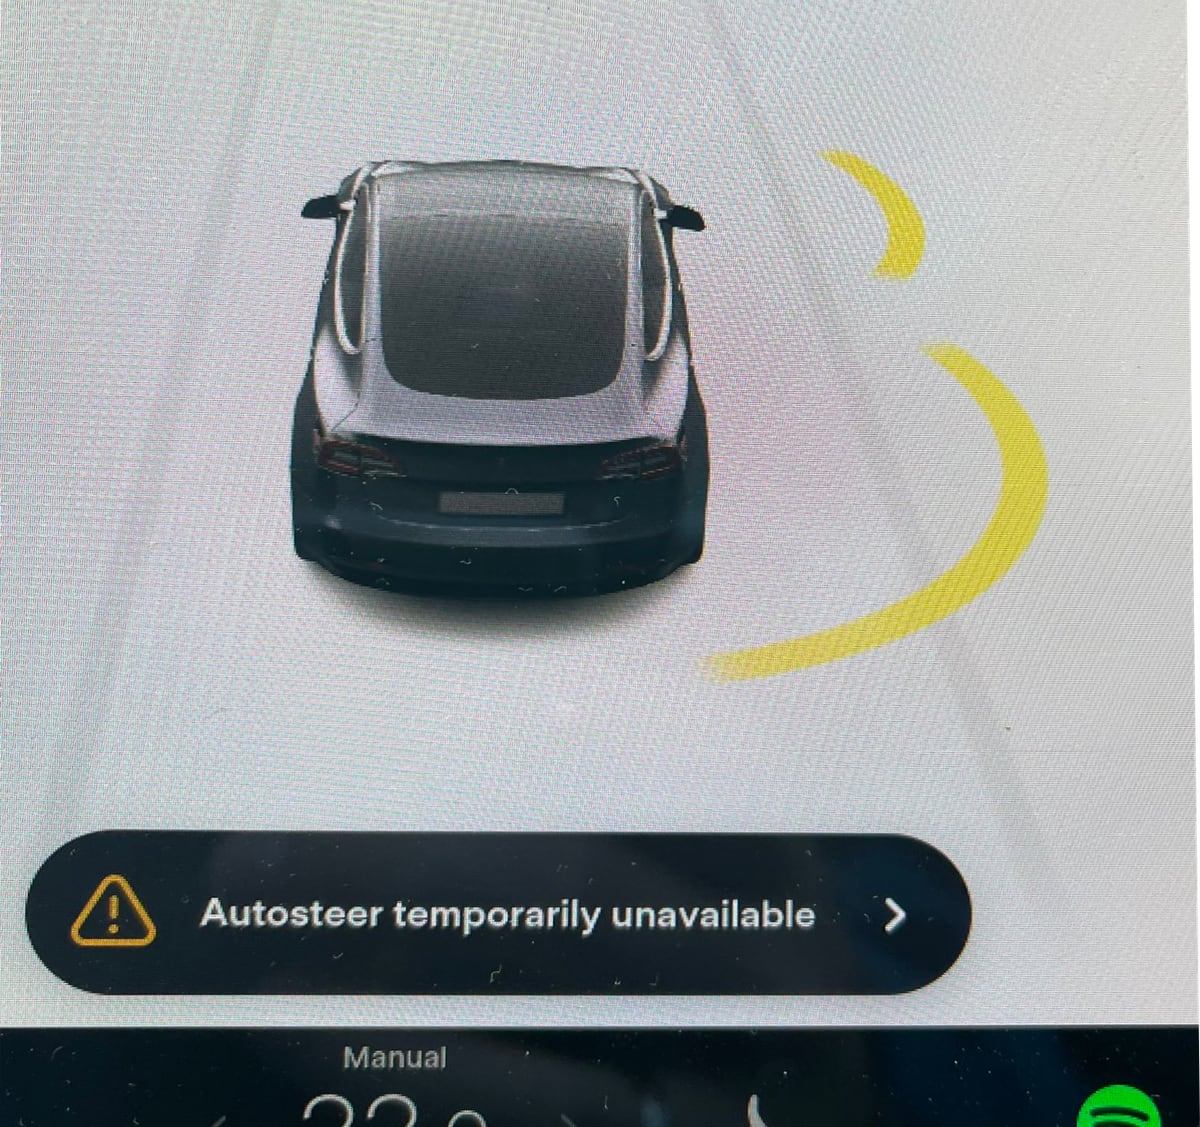 Tesla Vehicle Alerts feature in update 2022.28.5